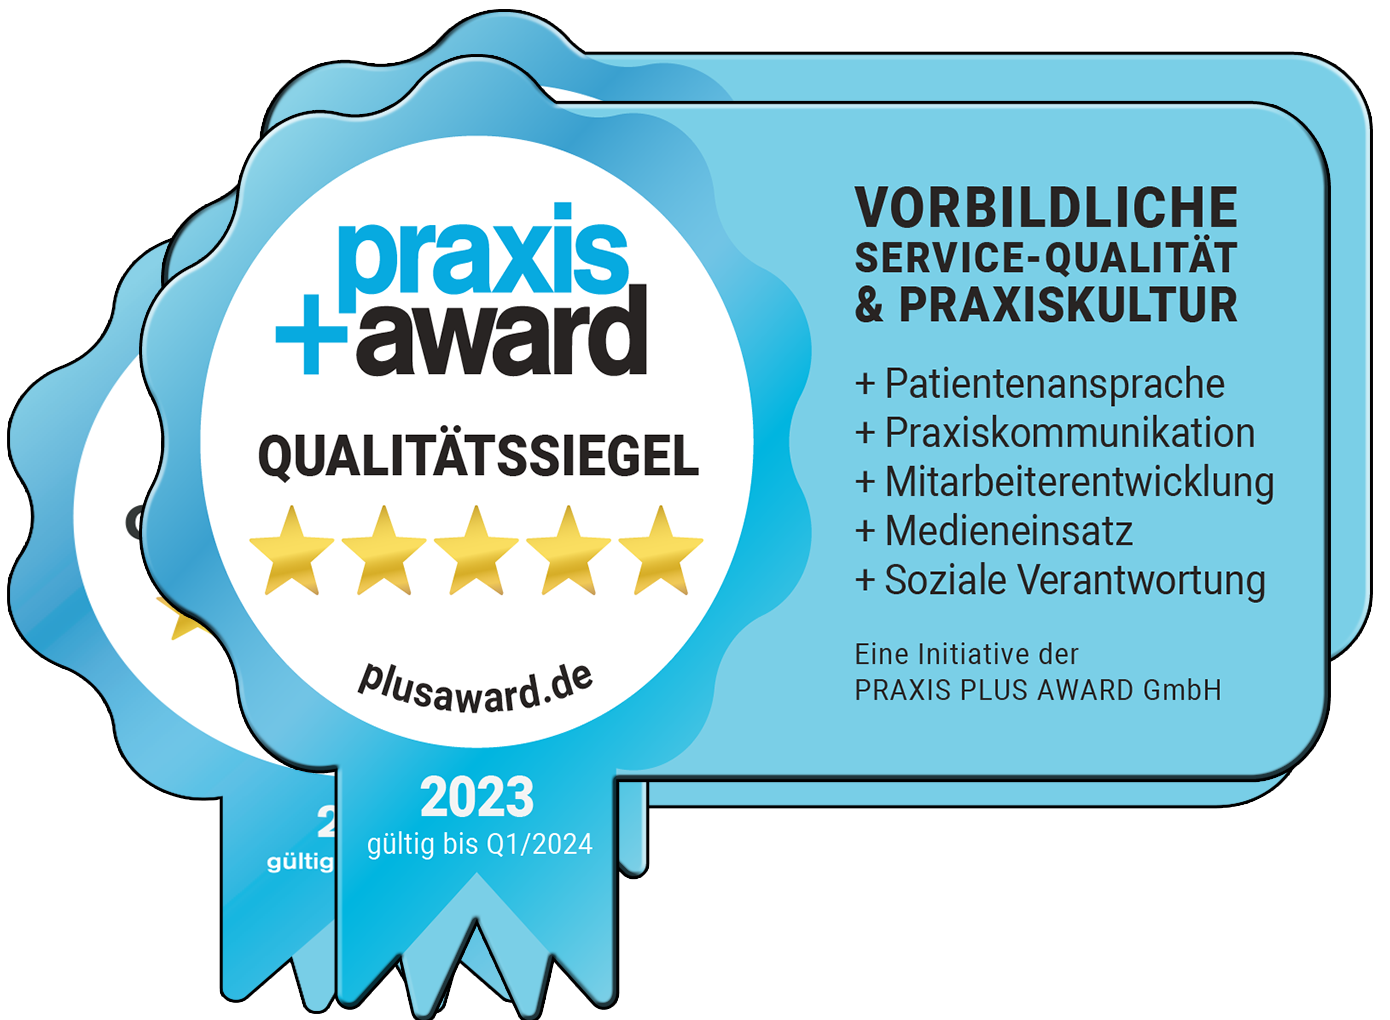 Praxis+Award Qualittssiegel